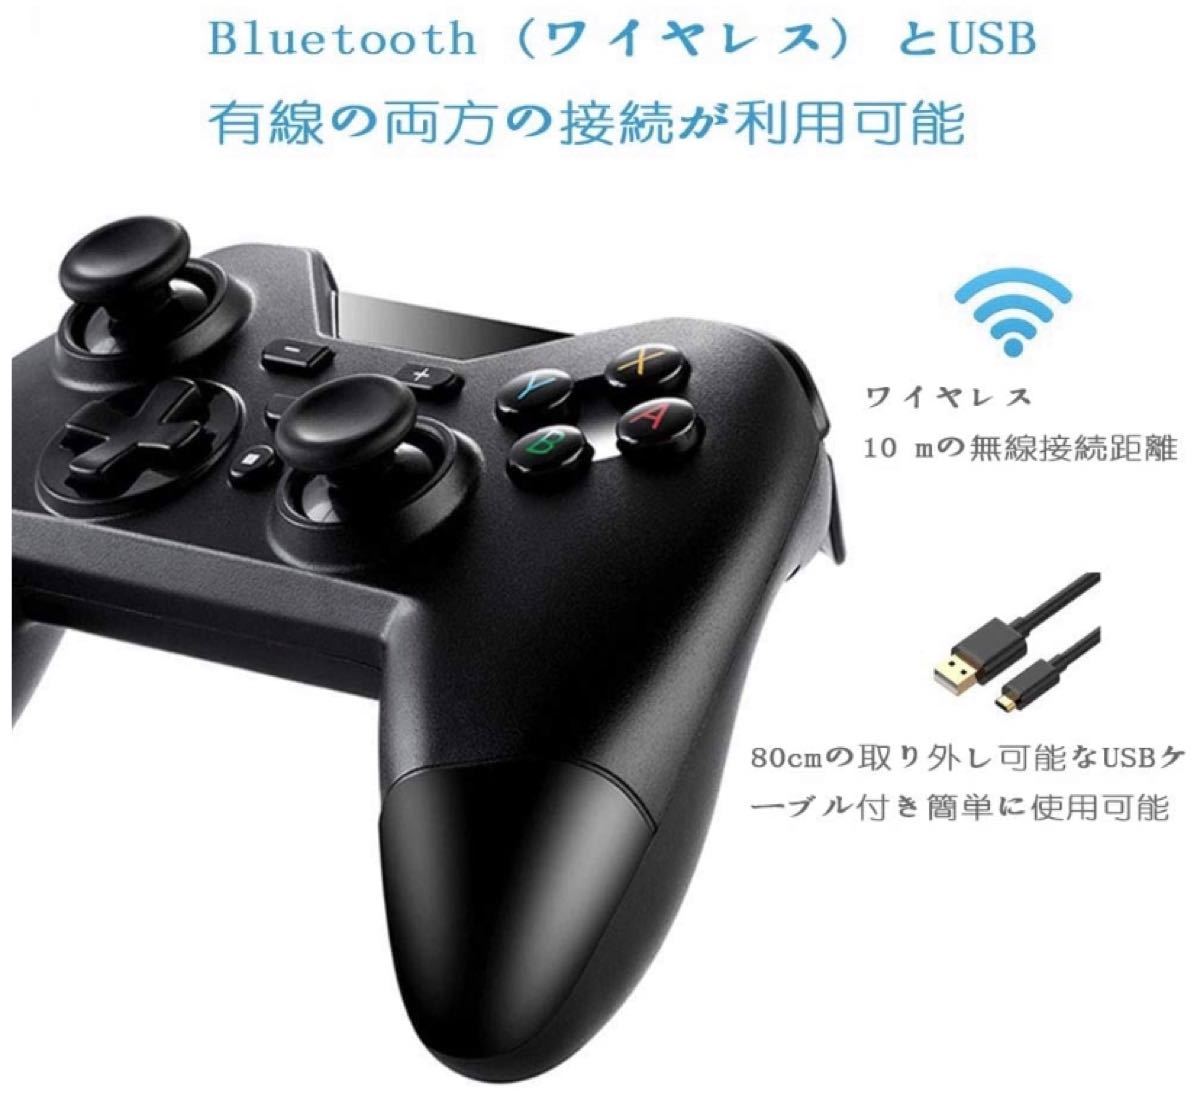 Switchワイヤレスコントローラー Nintendo Bluetooth